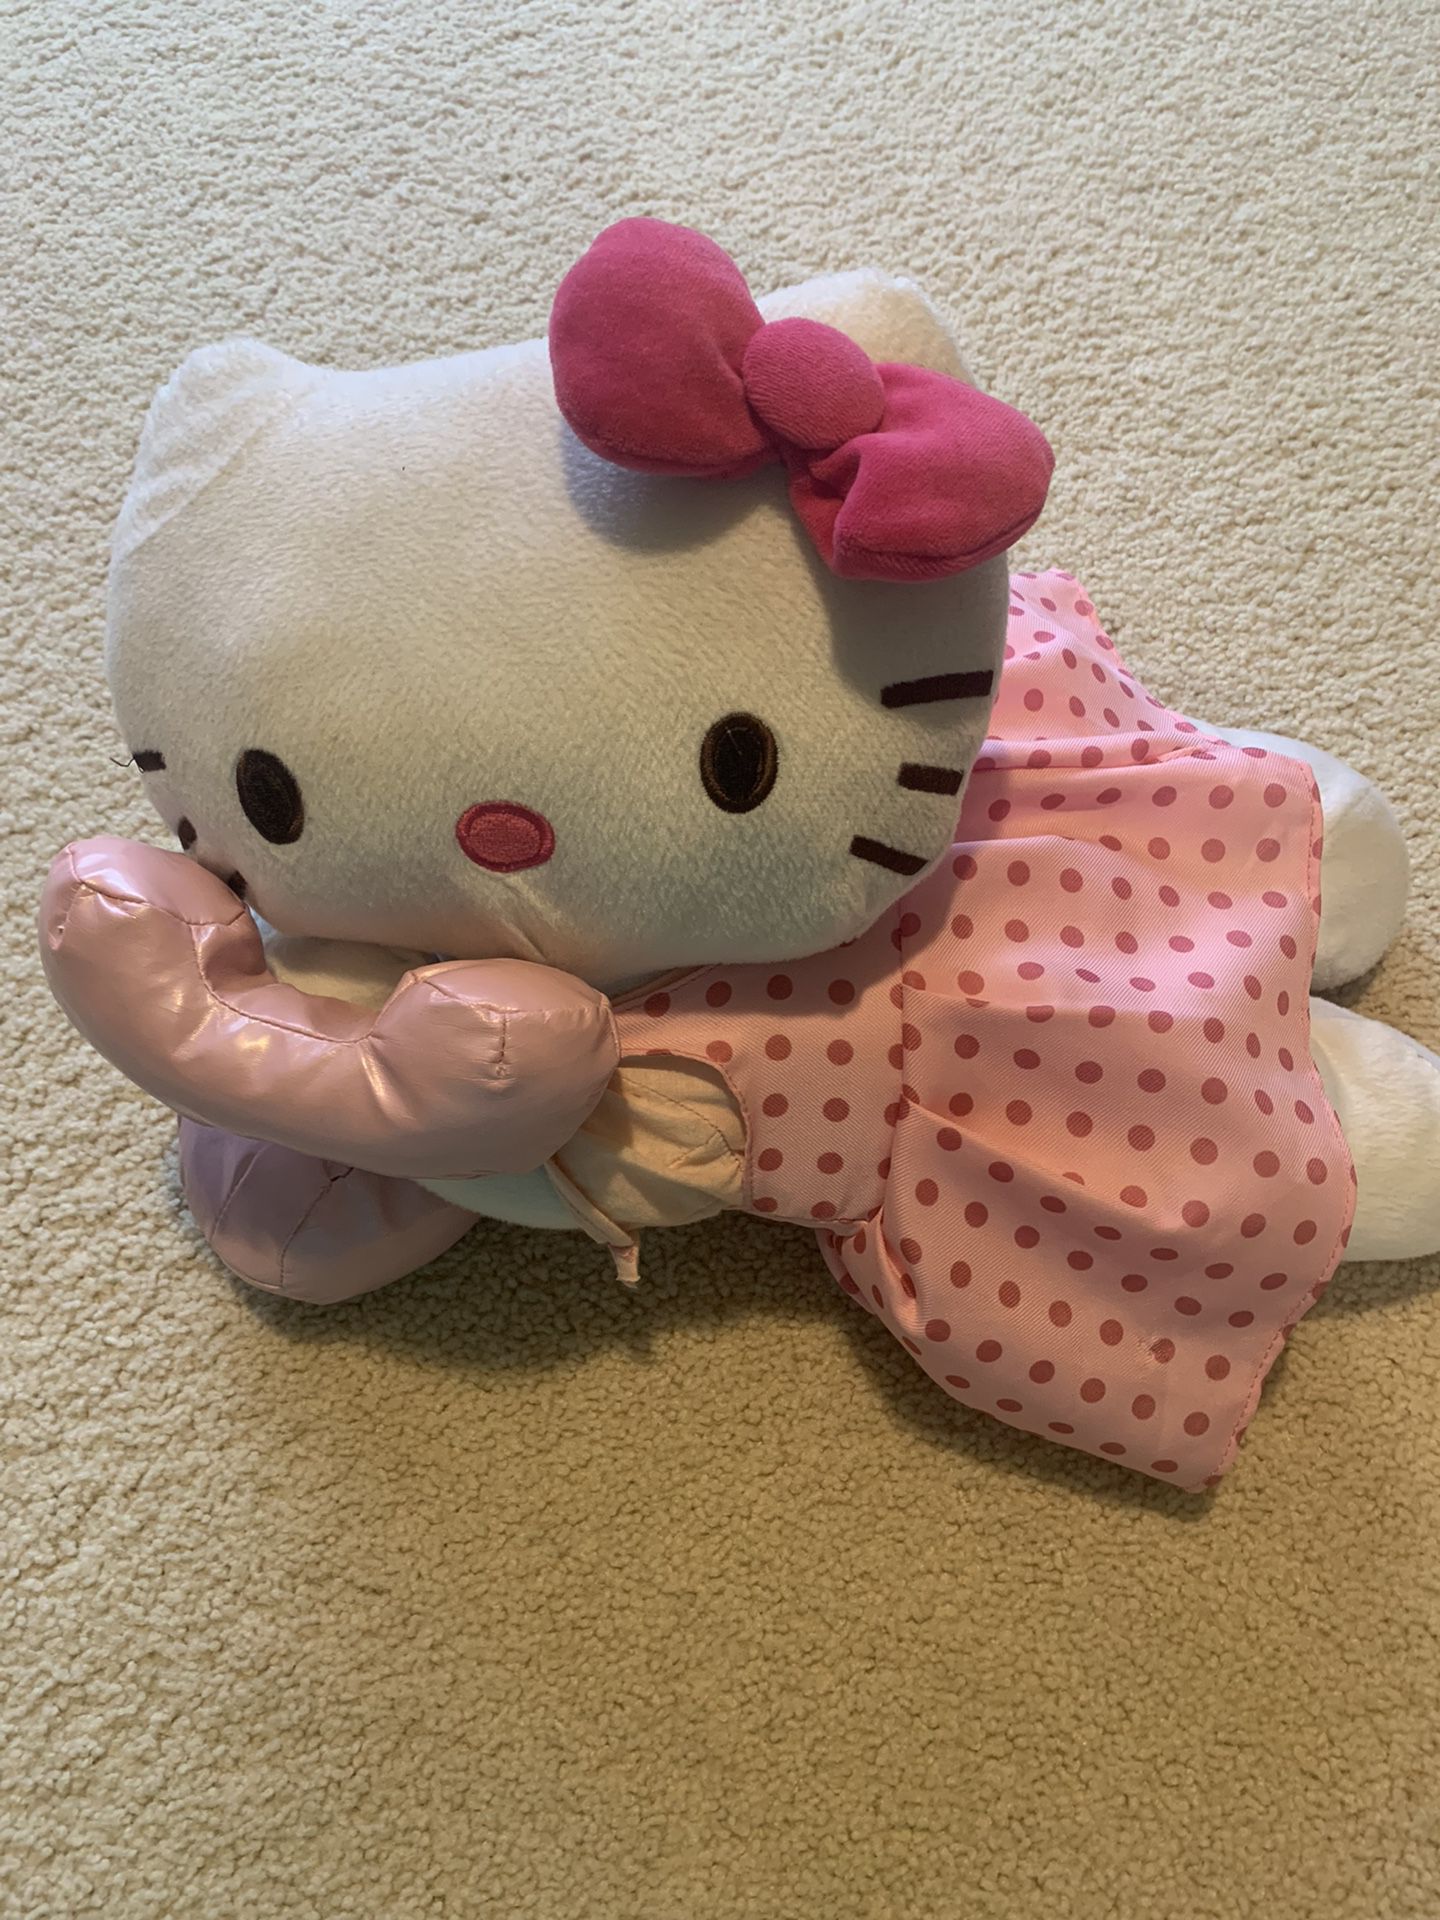 Hello Kitty pillow